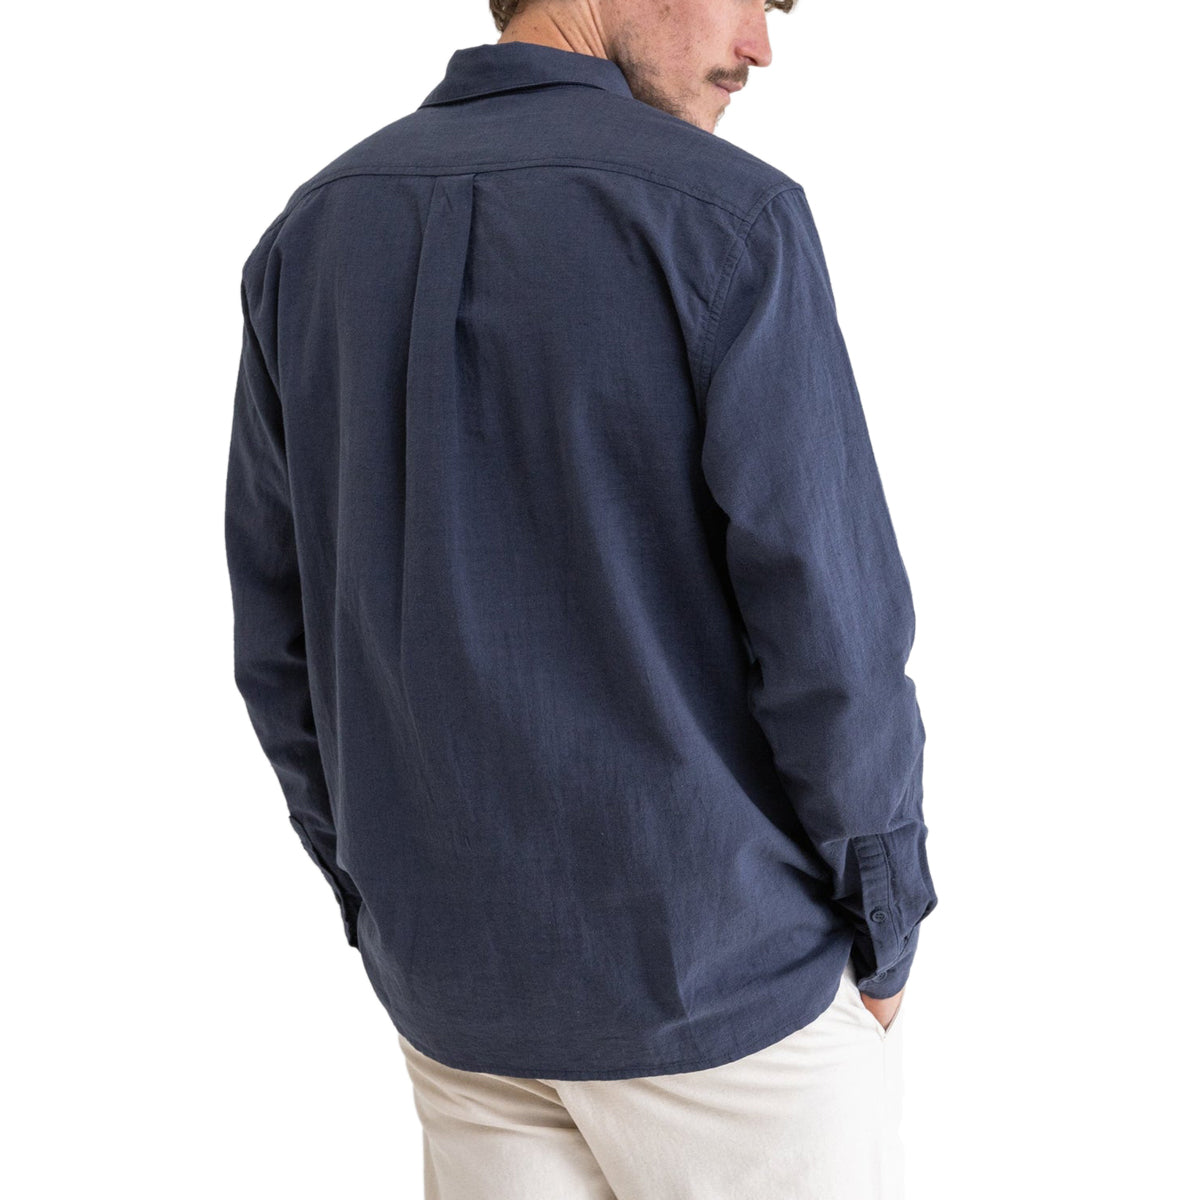 Rhythm Classic Linen Long Sleeve Shirt - Worn Navy image 2